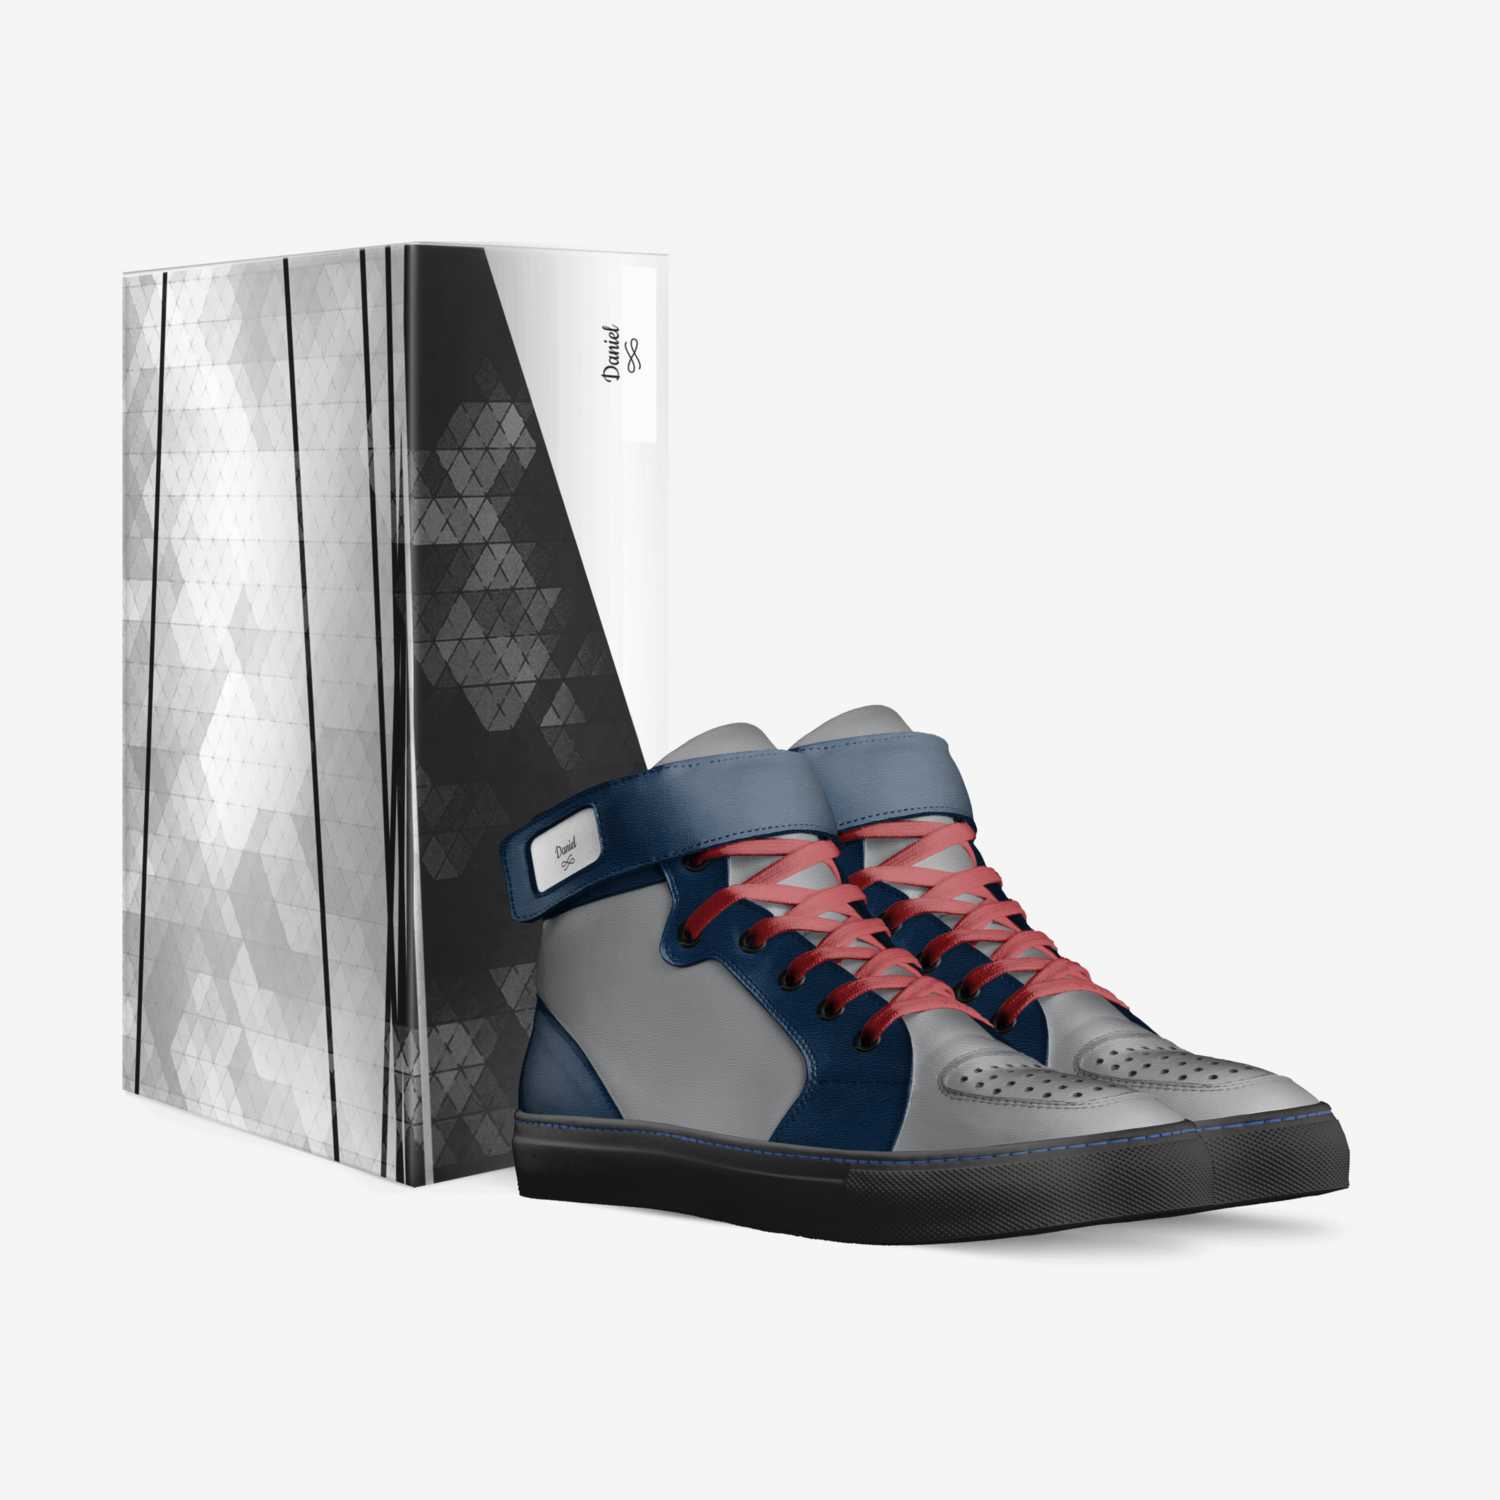 Daniel custom made in Italy shoes by Eddy Nevarez | Box view